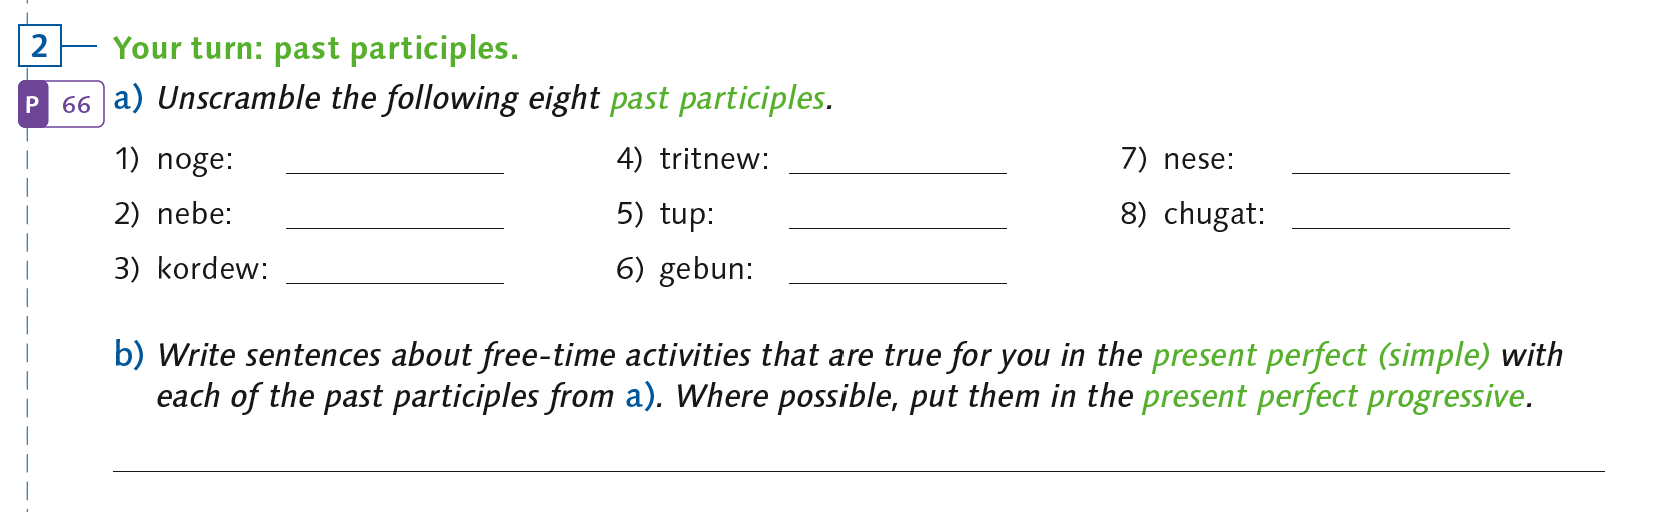 Grammatik-Vermittlung easy 3 book p 70 your turn past participles